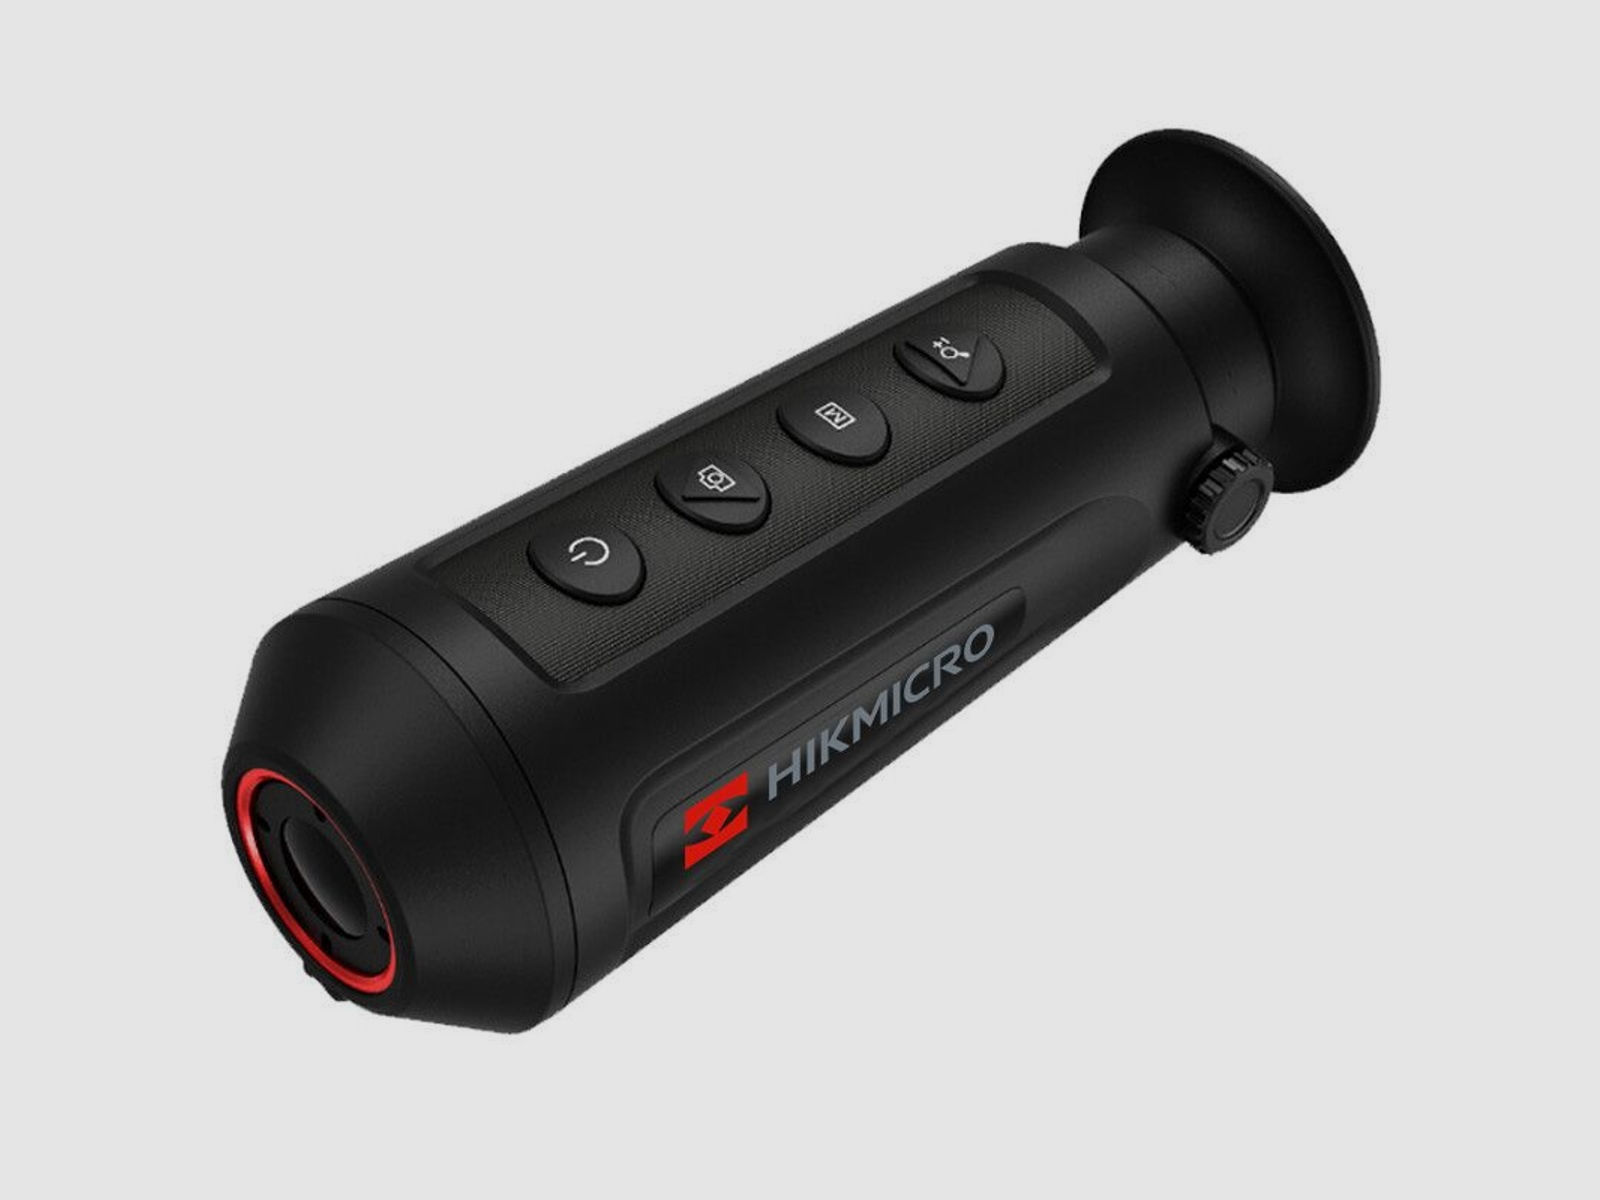 Hikmicro Lynx Pro LH15 Wärmebildkamera